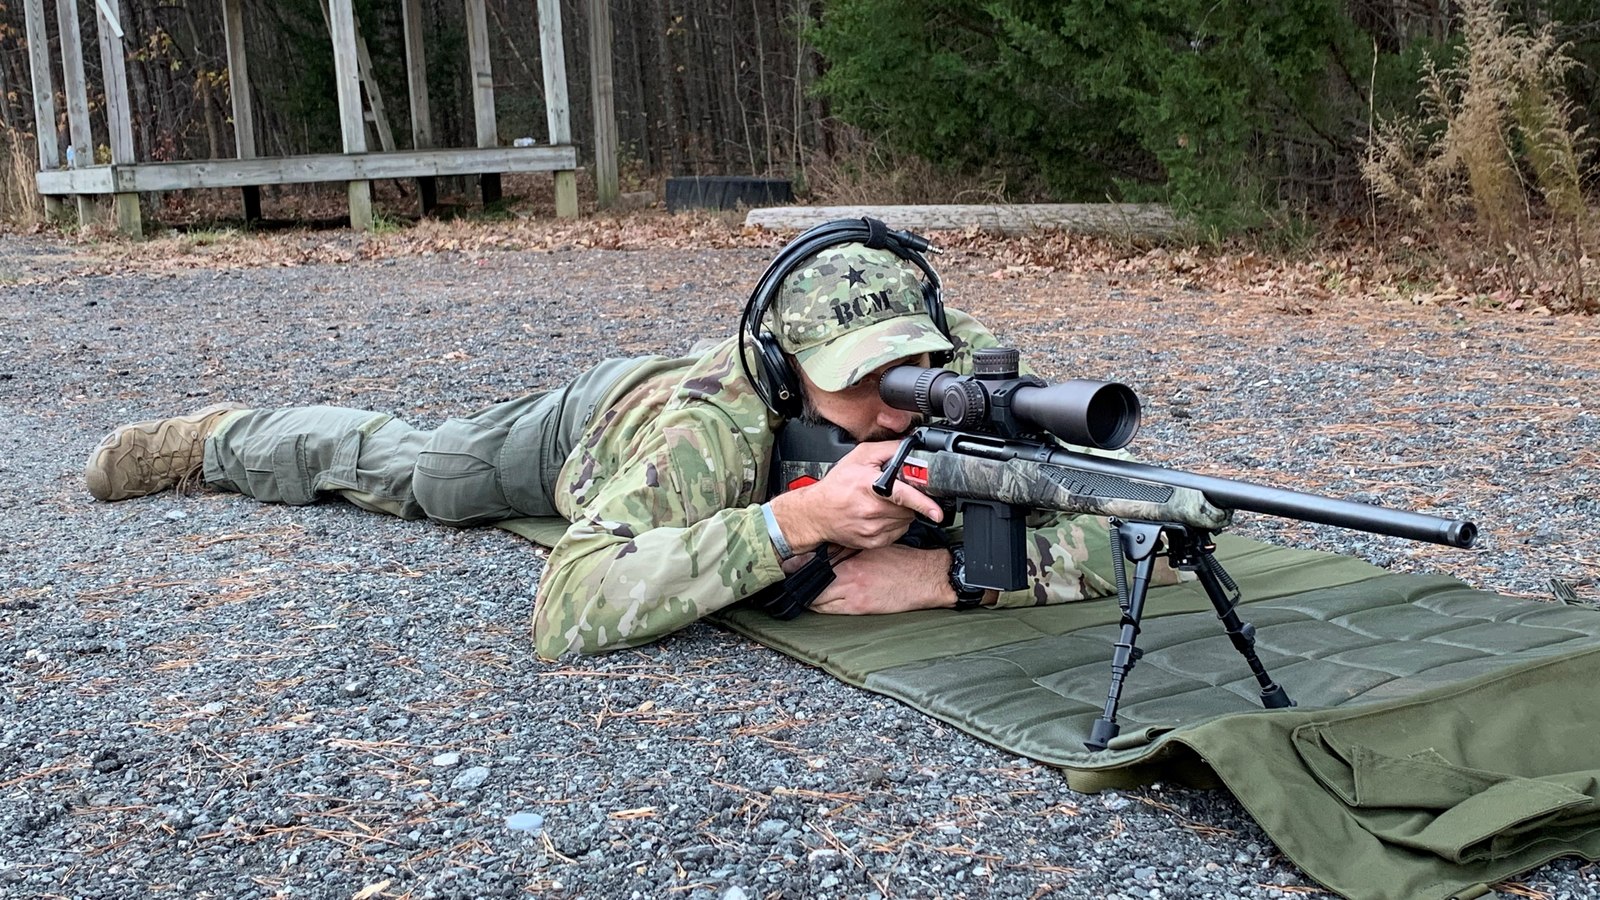 savage sniper rifle stocks